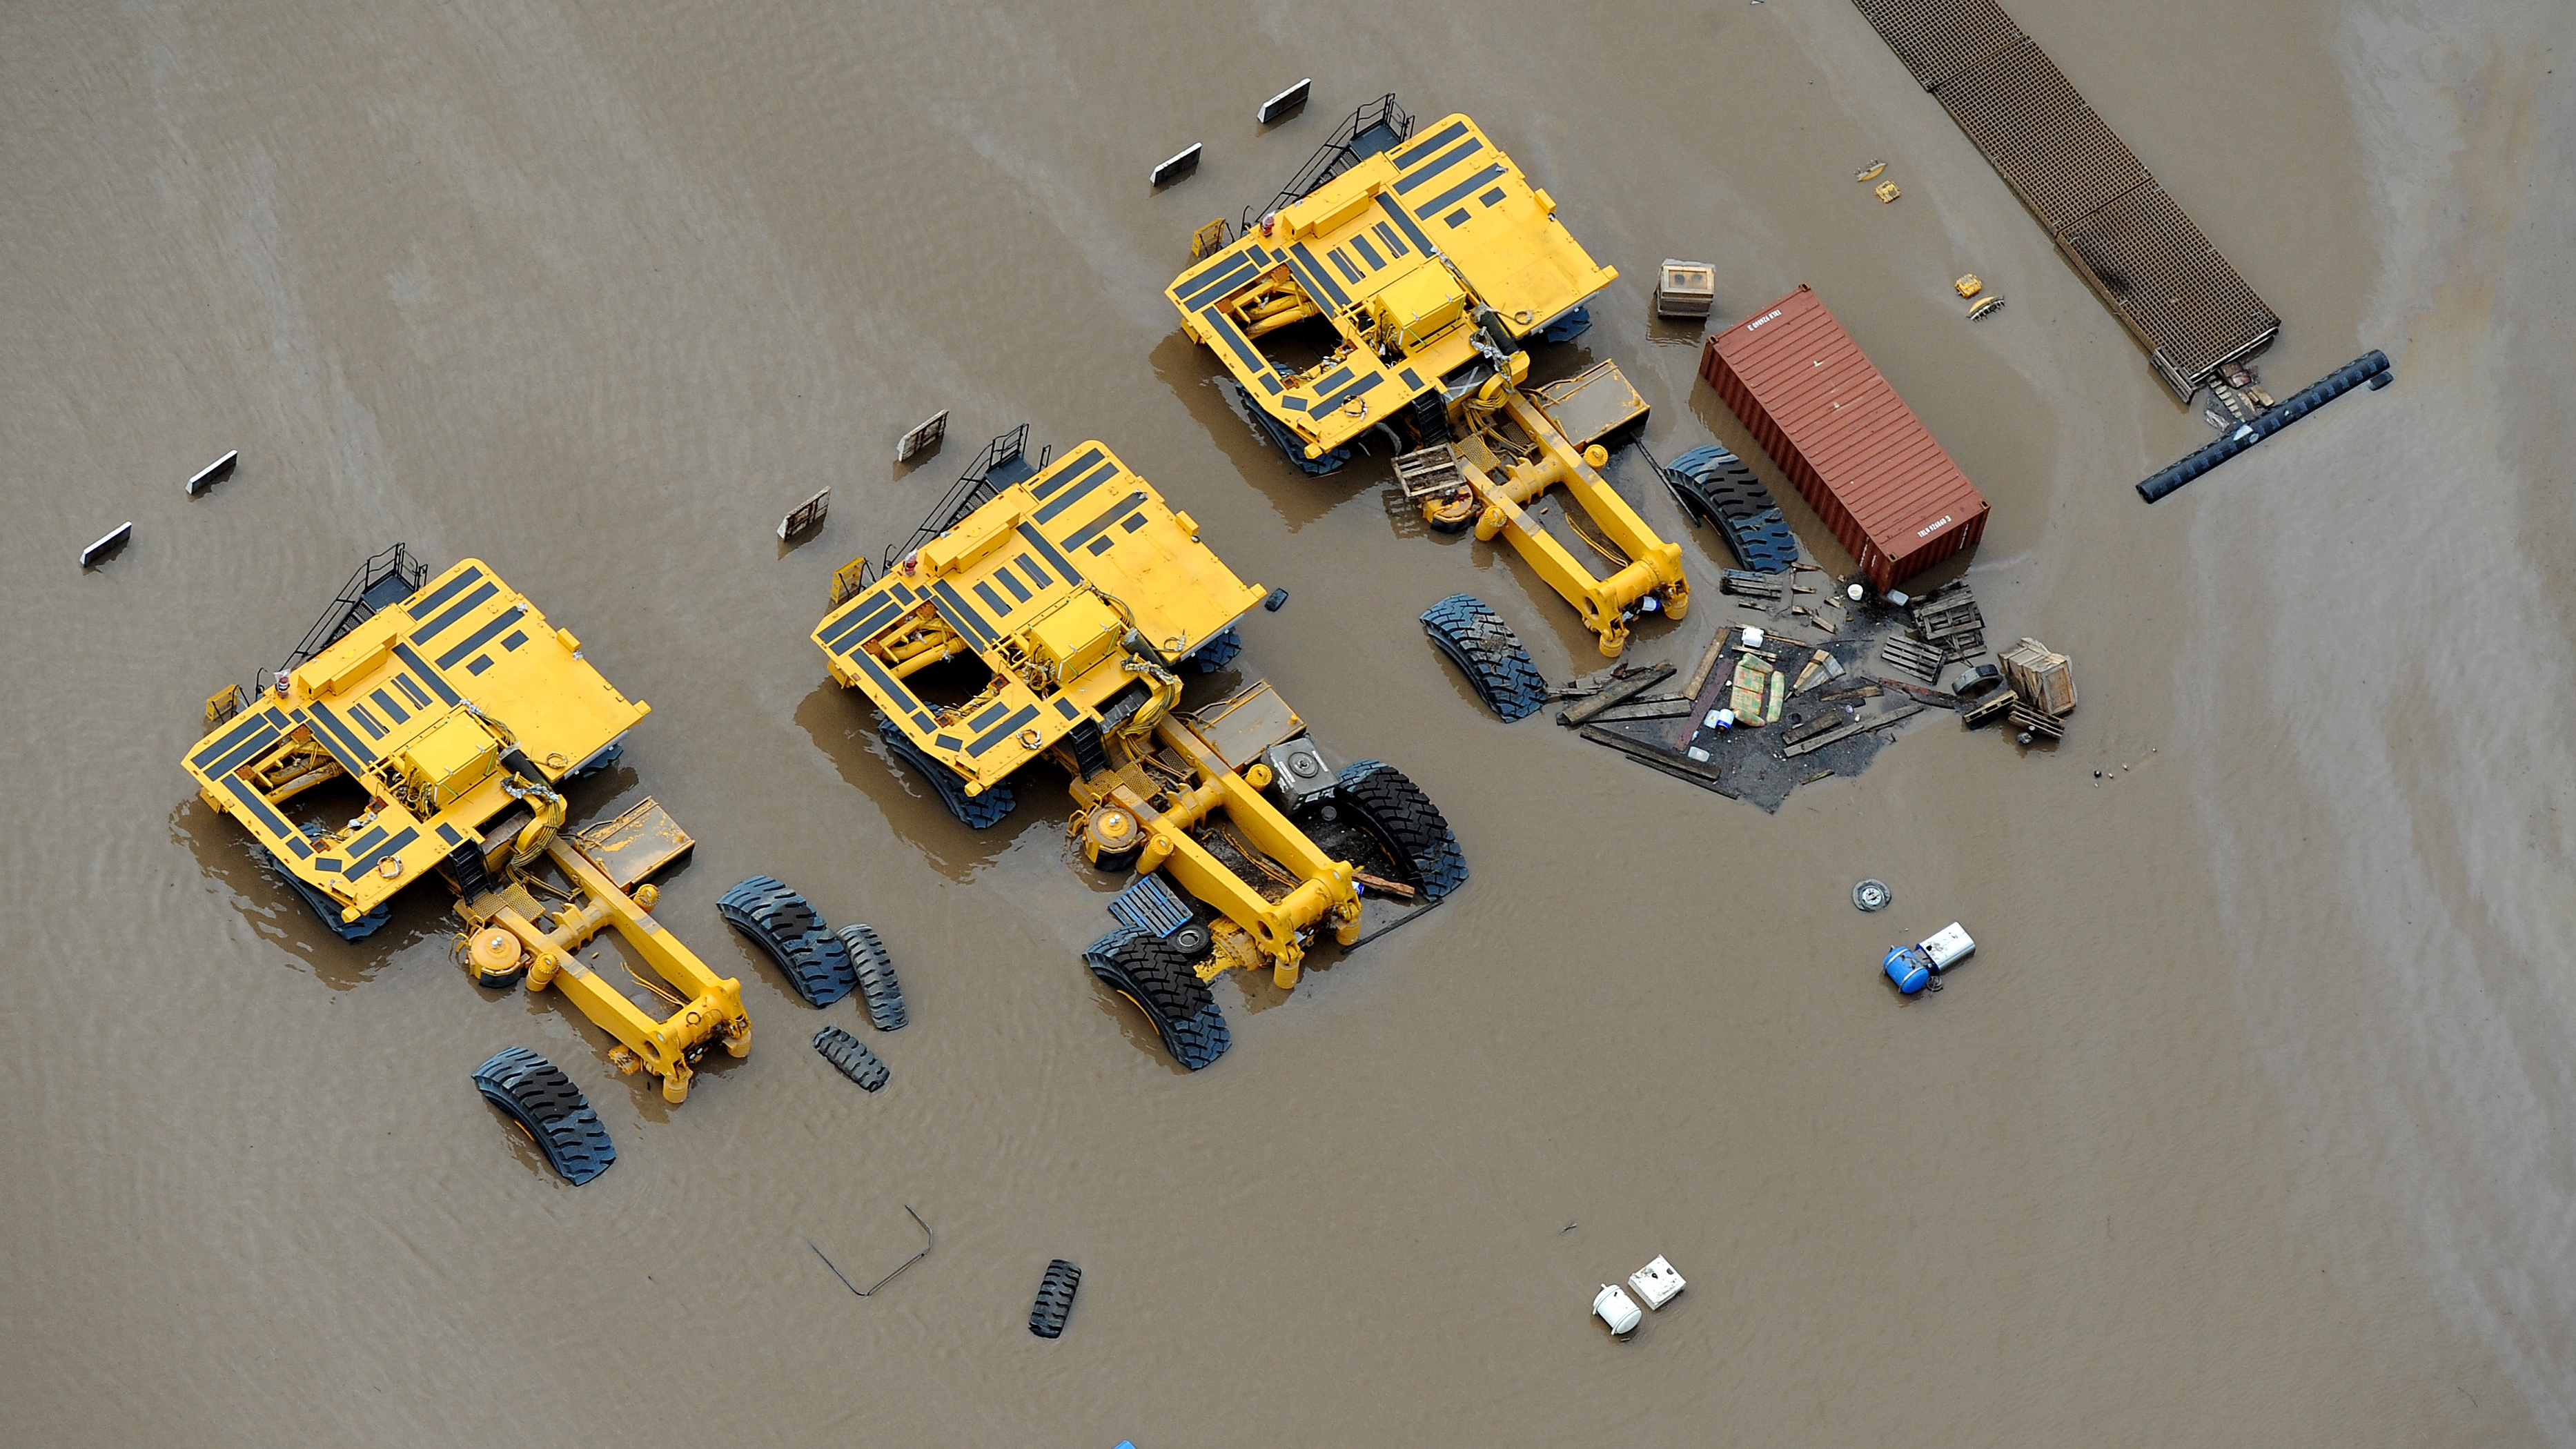 Australia hit hard by 2010/2011 floods